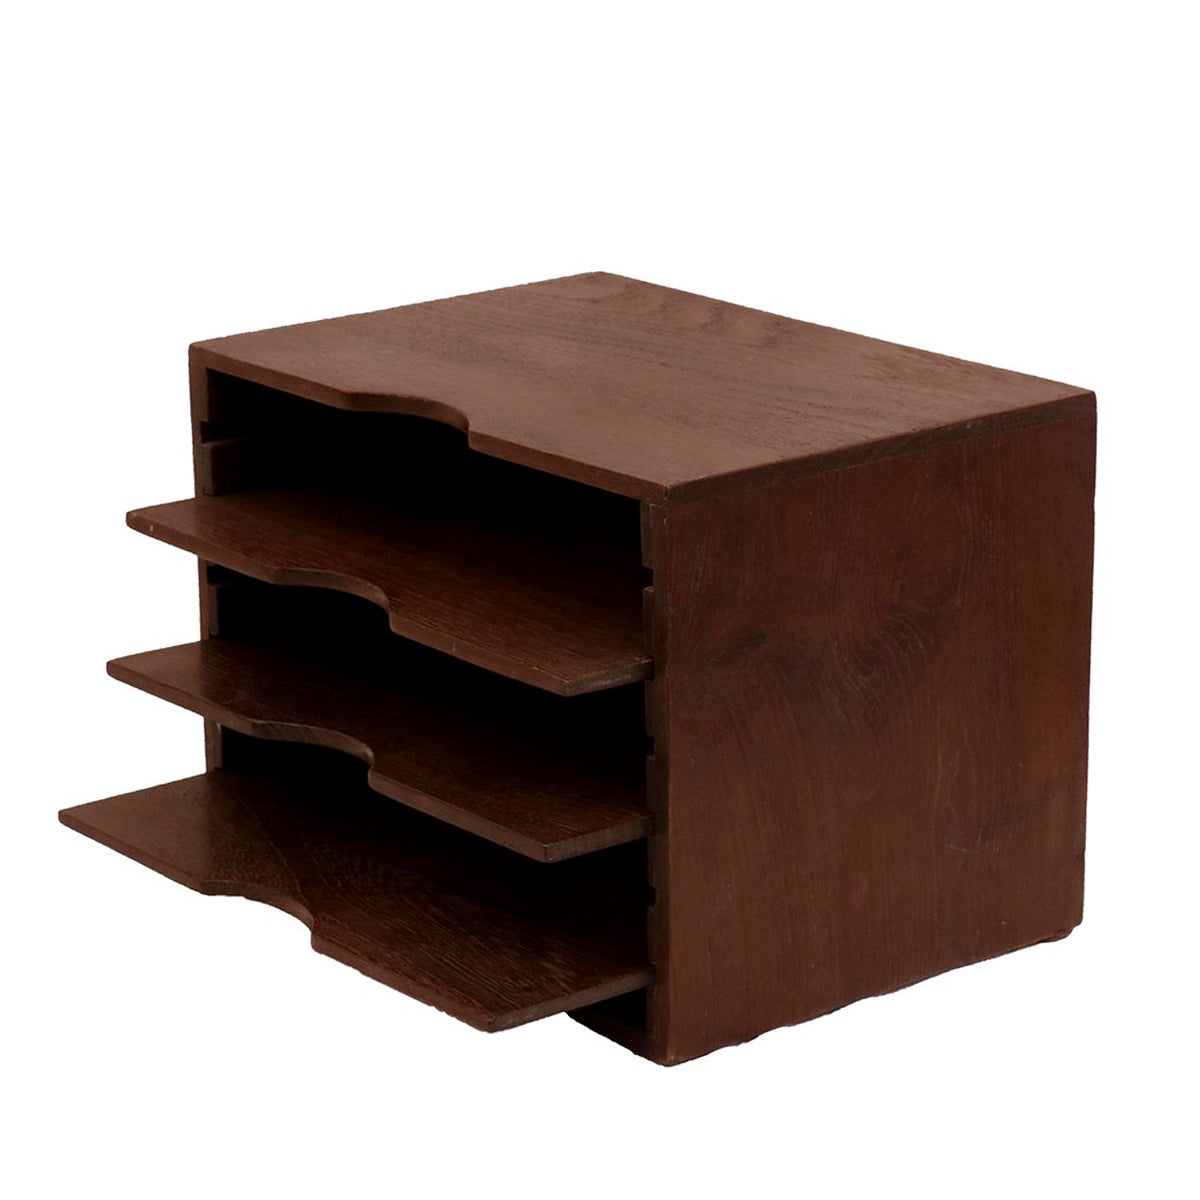 Horizontal Wooden Paper Rack (Dark Tone) Desk Organizer